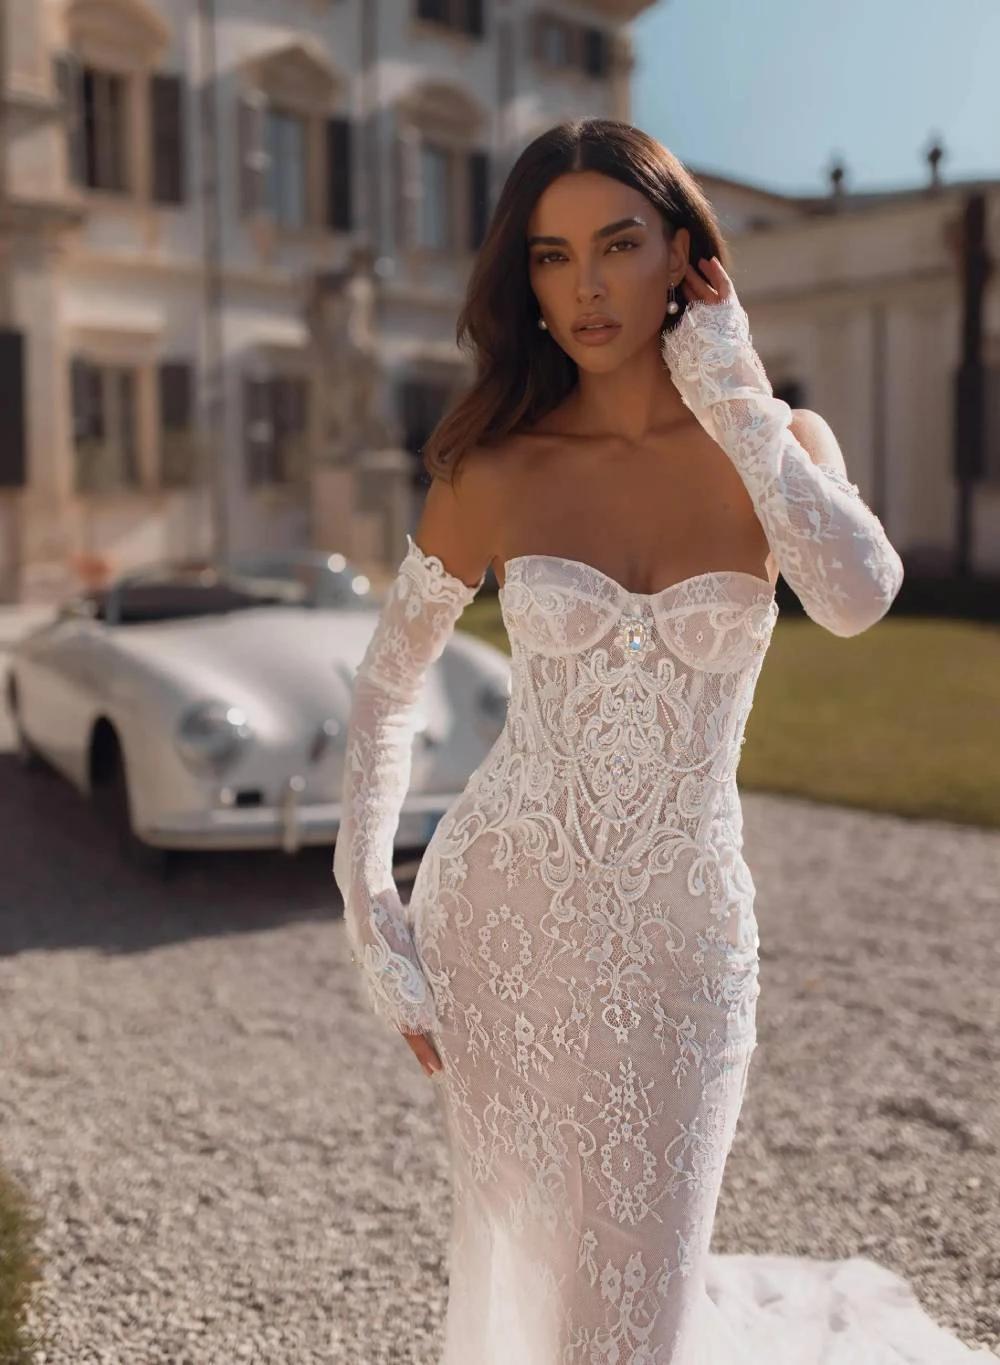 Model wearing a white dress by Berta Privee